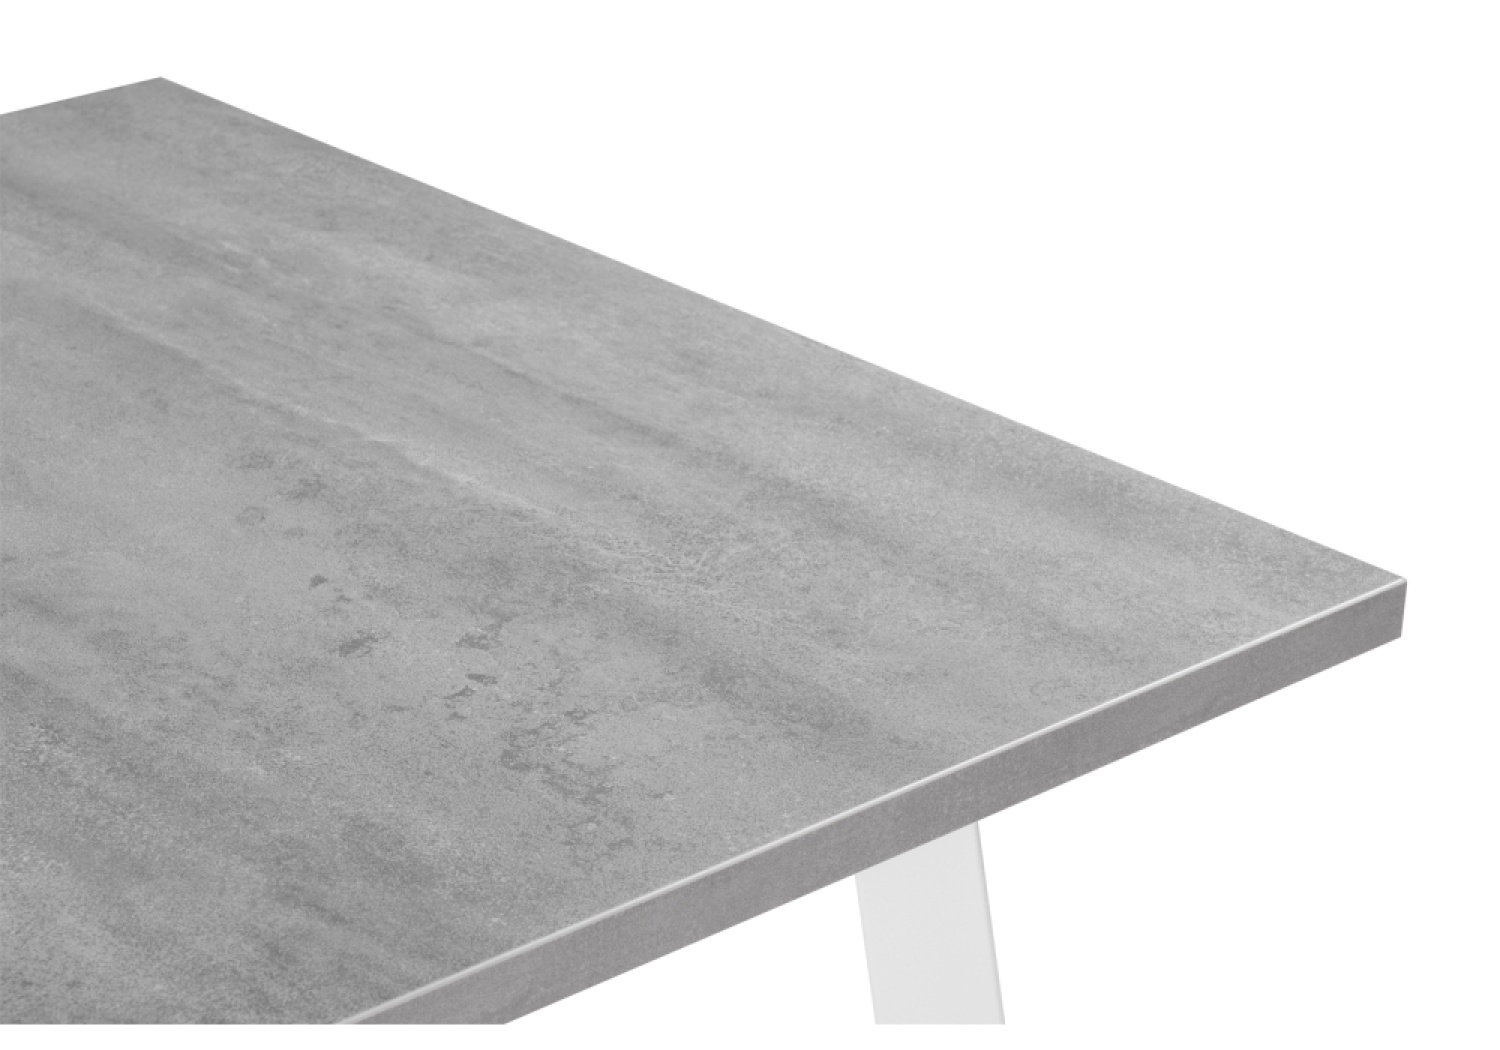 Деревянный стол Колон Лофт 120(160)х75х75 25 мм бетон / белый матовый